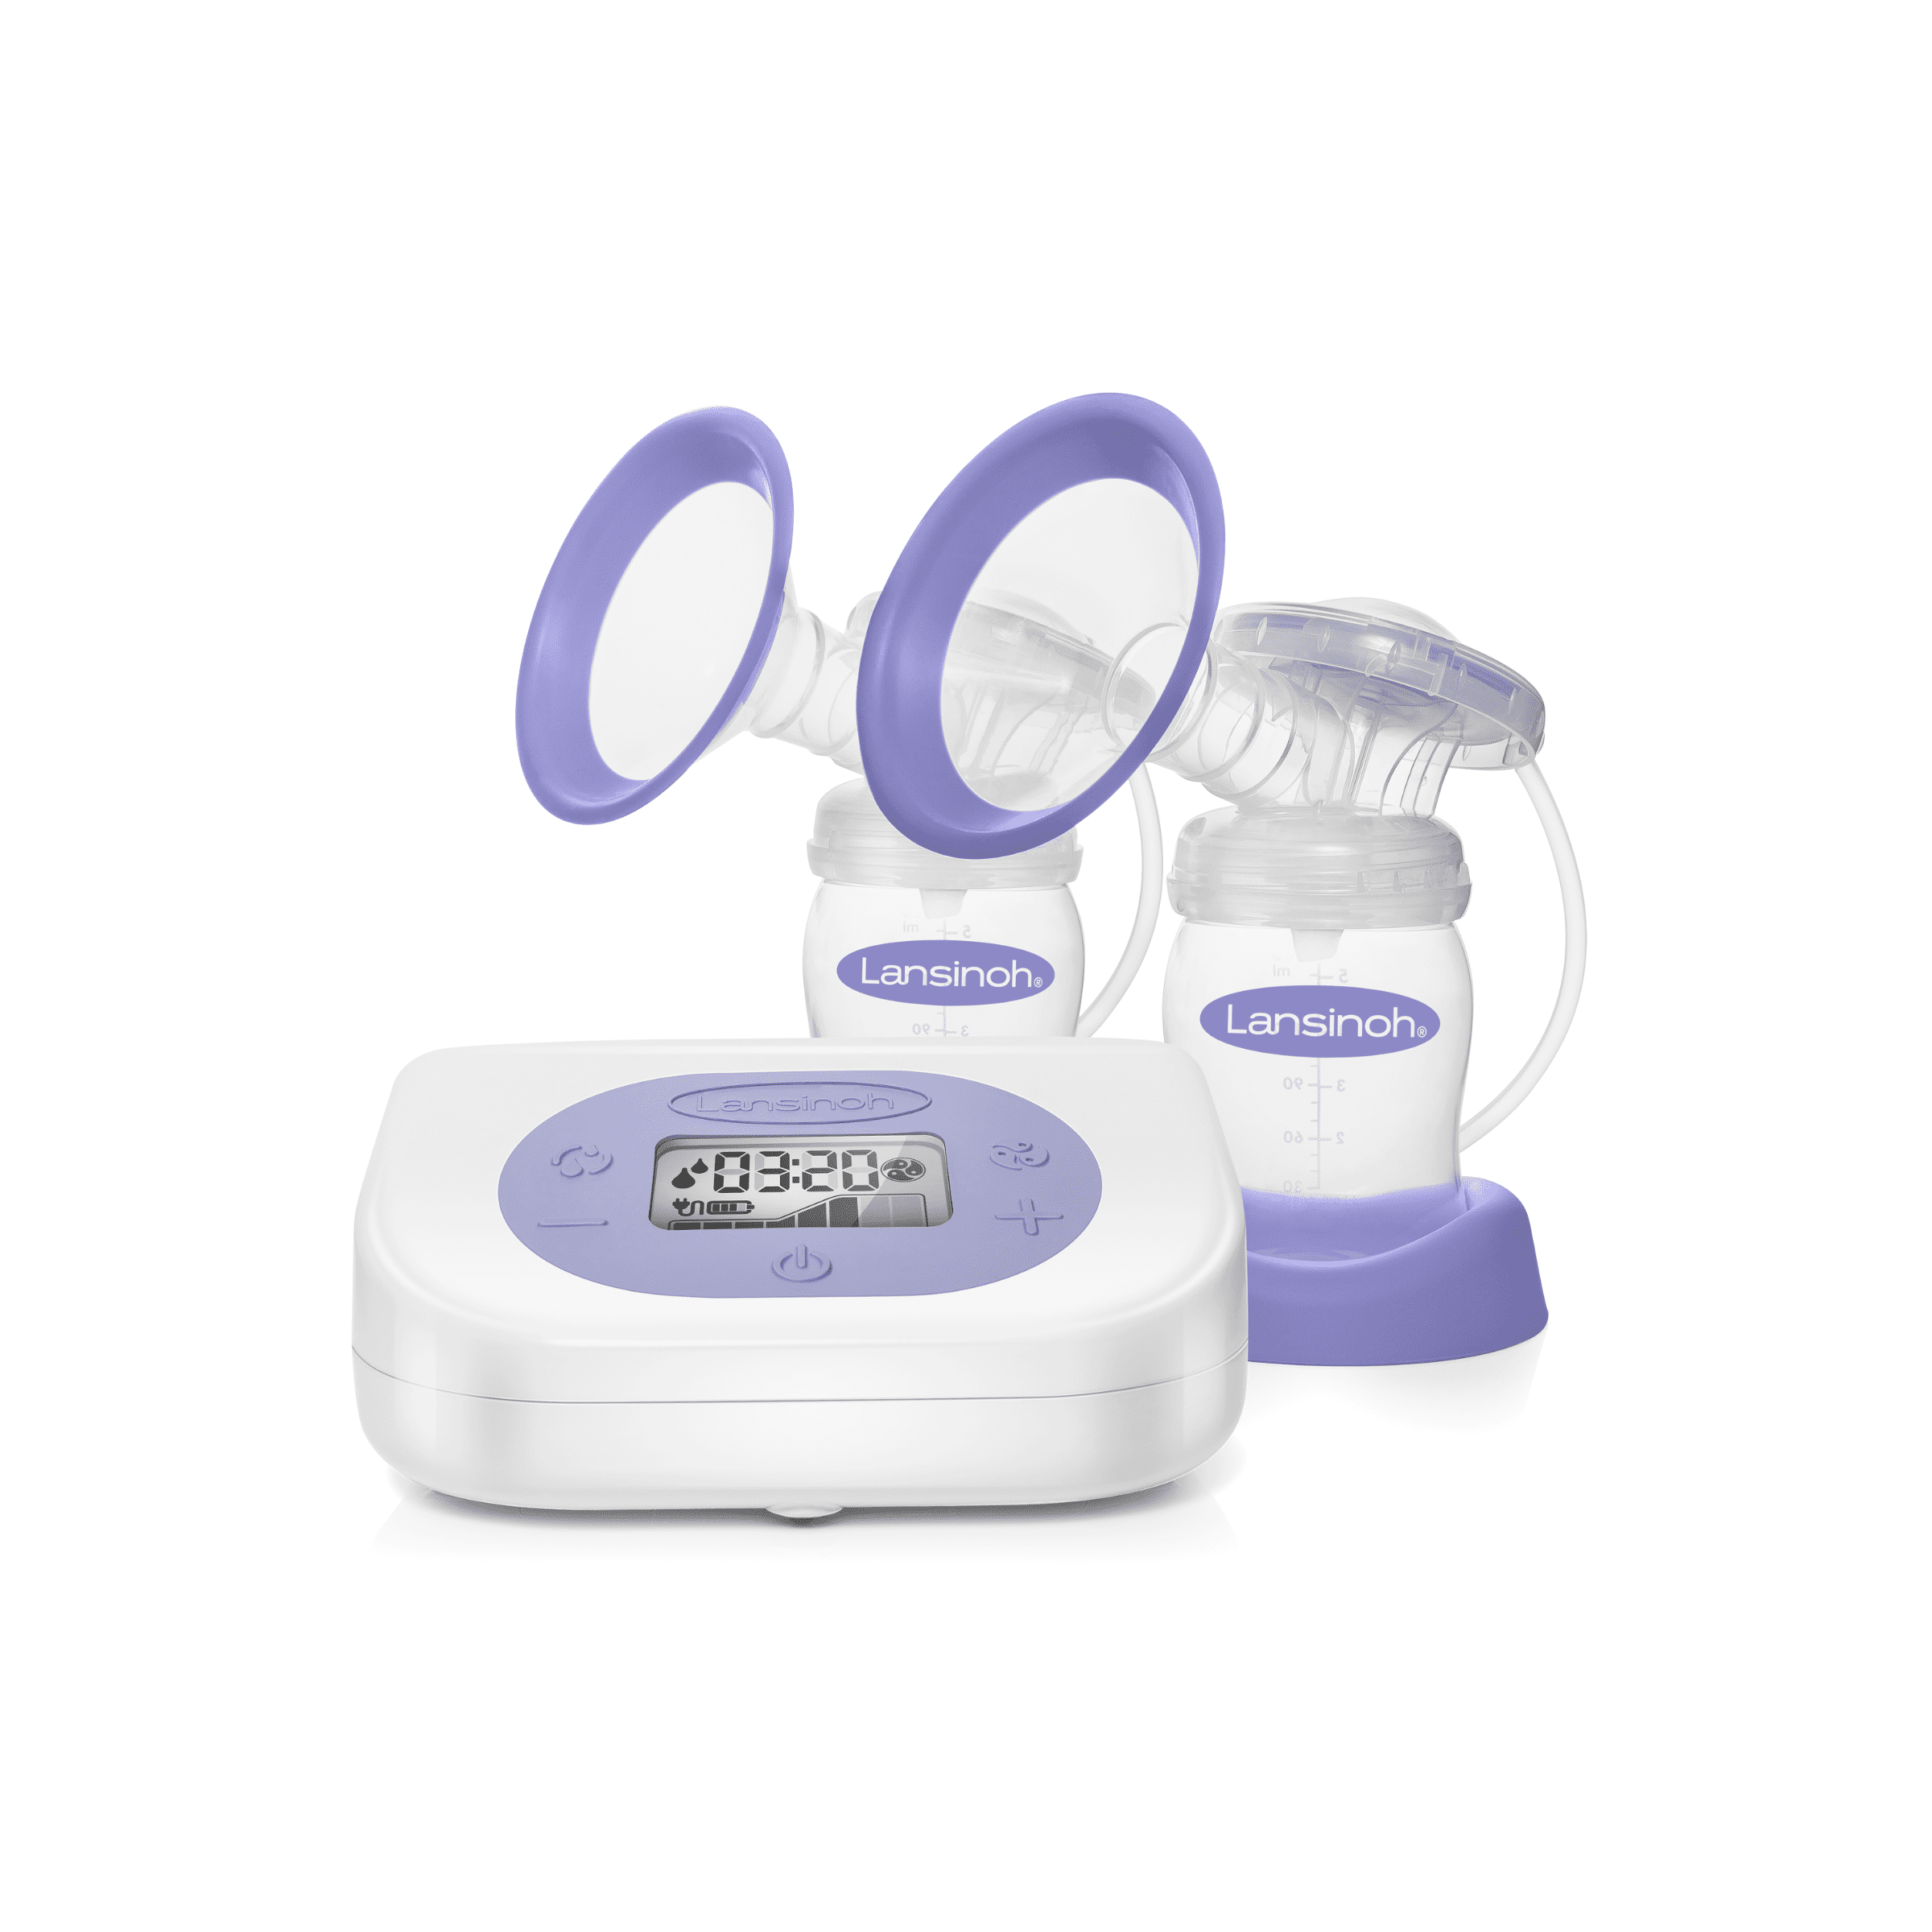 Lansinoh Smartpump 2 0 Double Electric Breast Pump For Nursing Moms